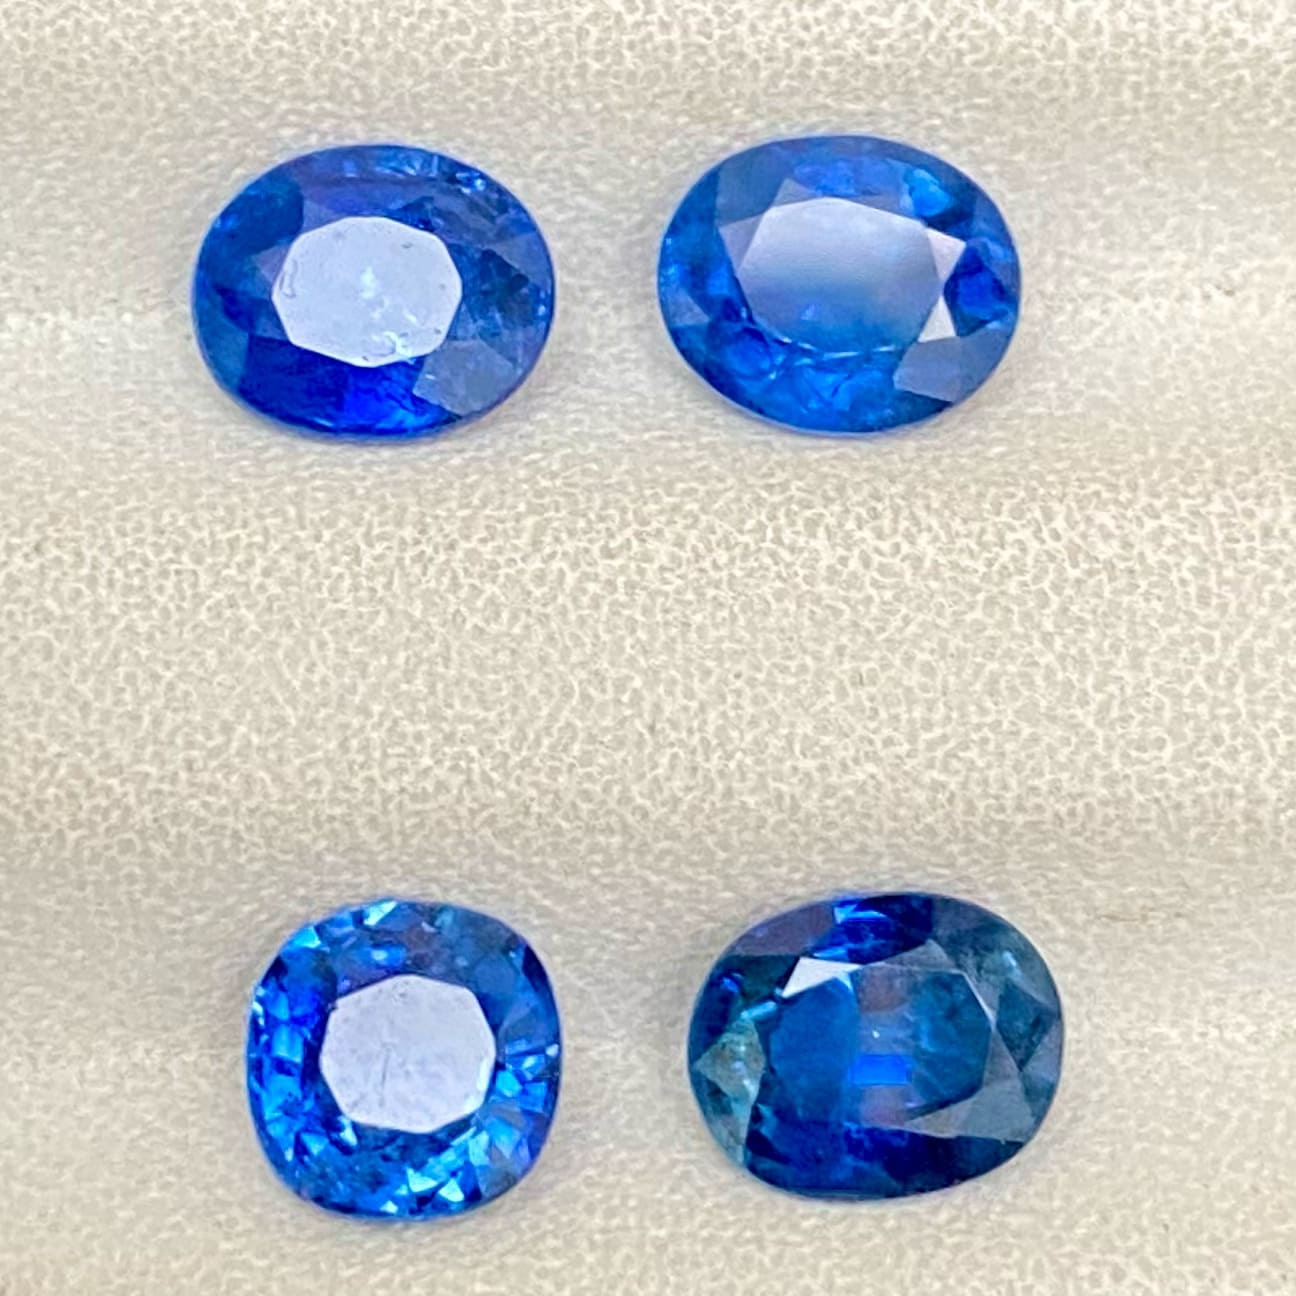 Faceted Blue Sapphires - 3.35 carat